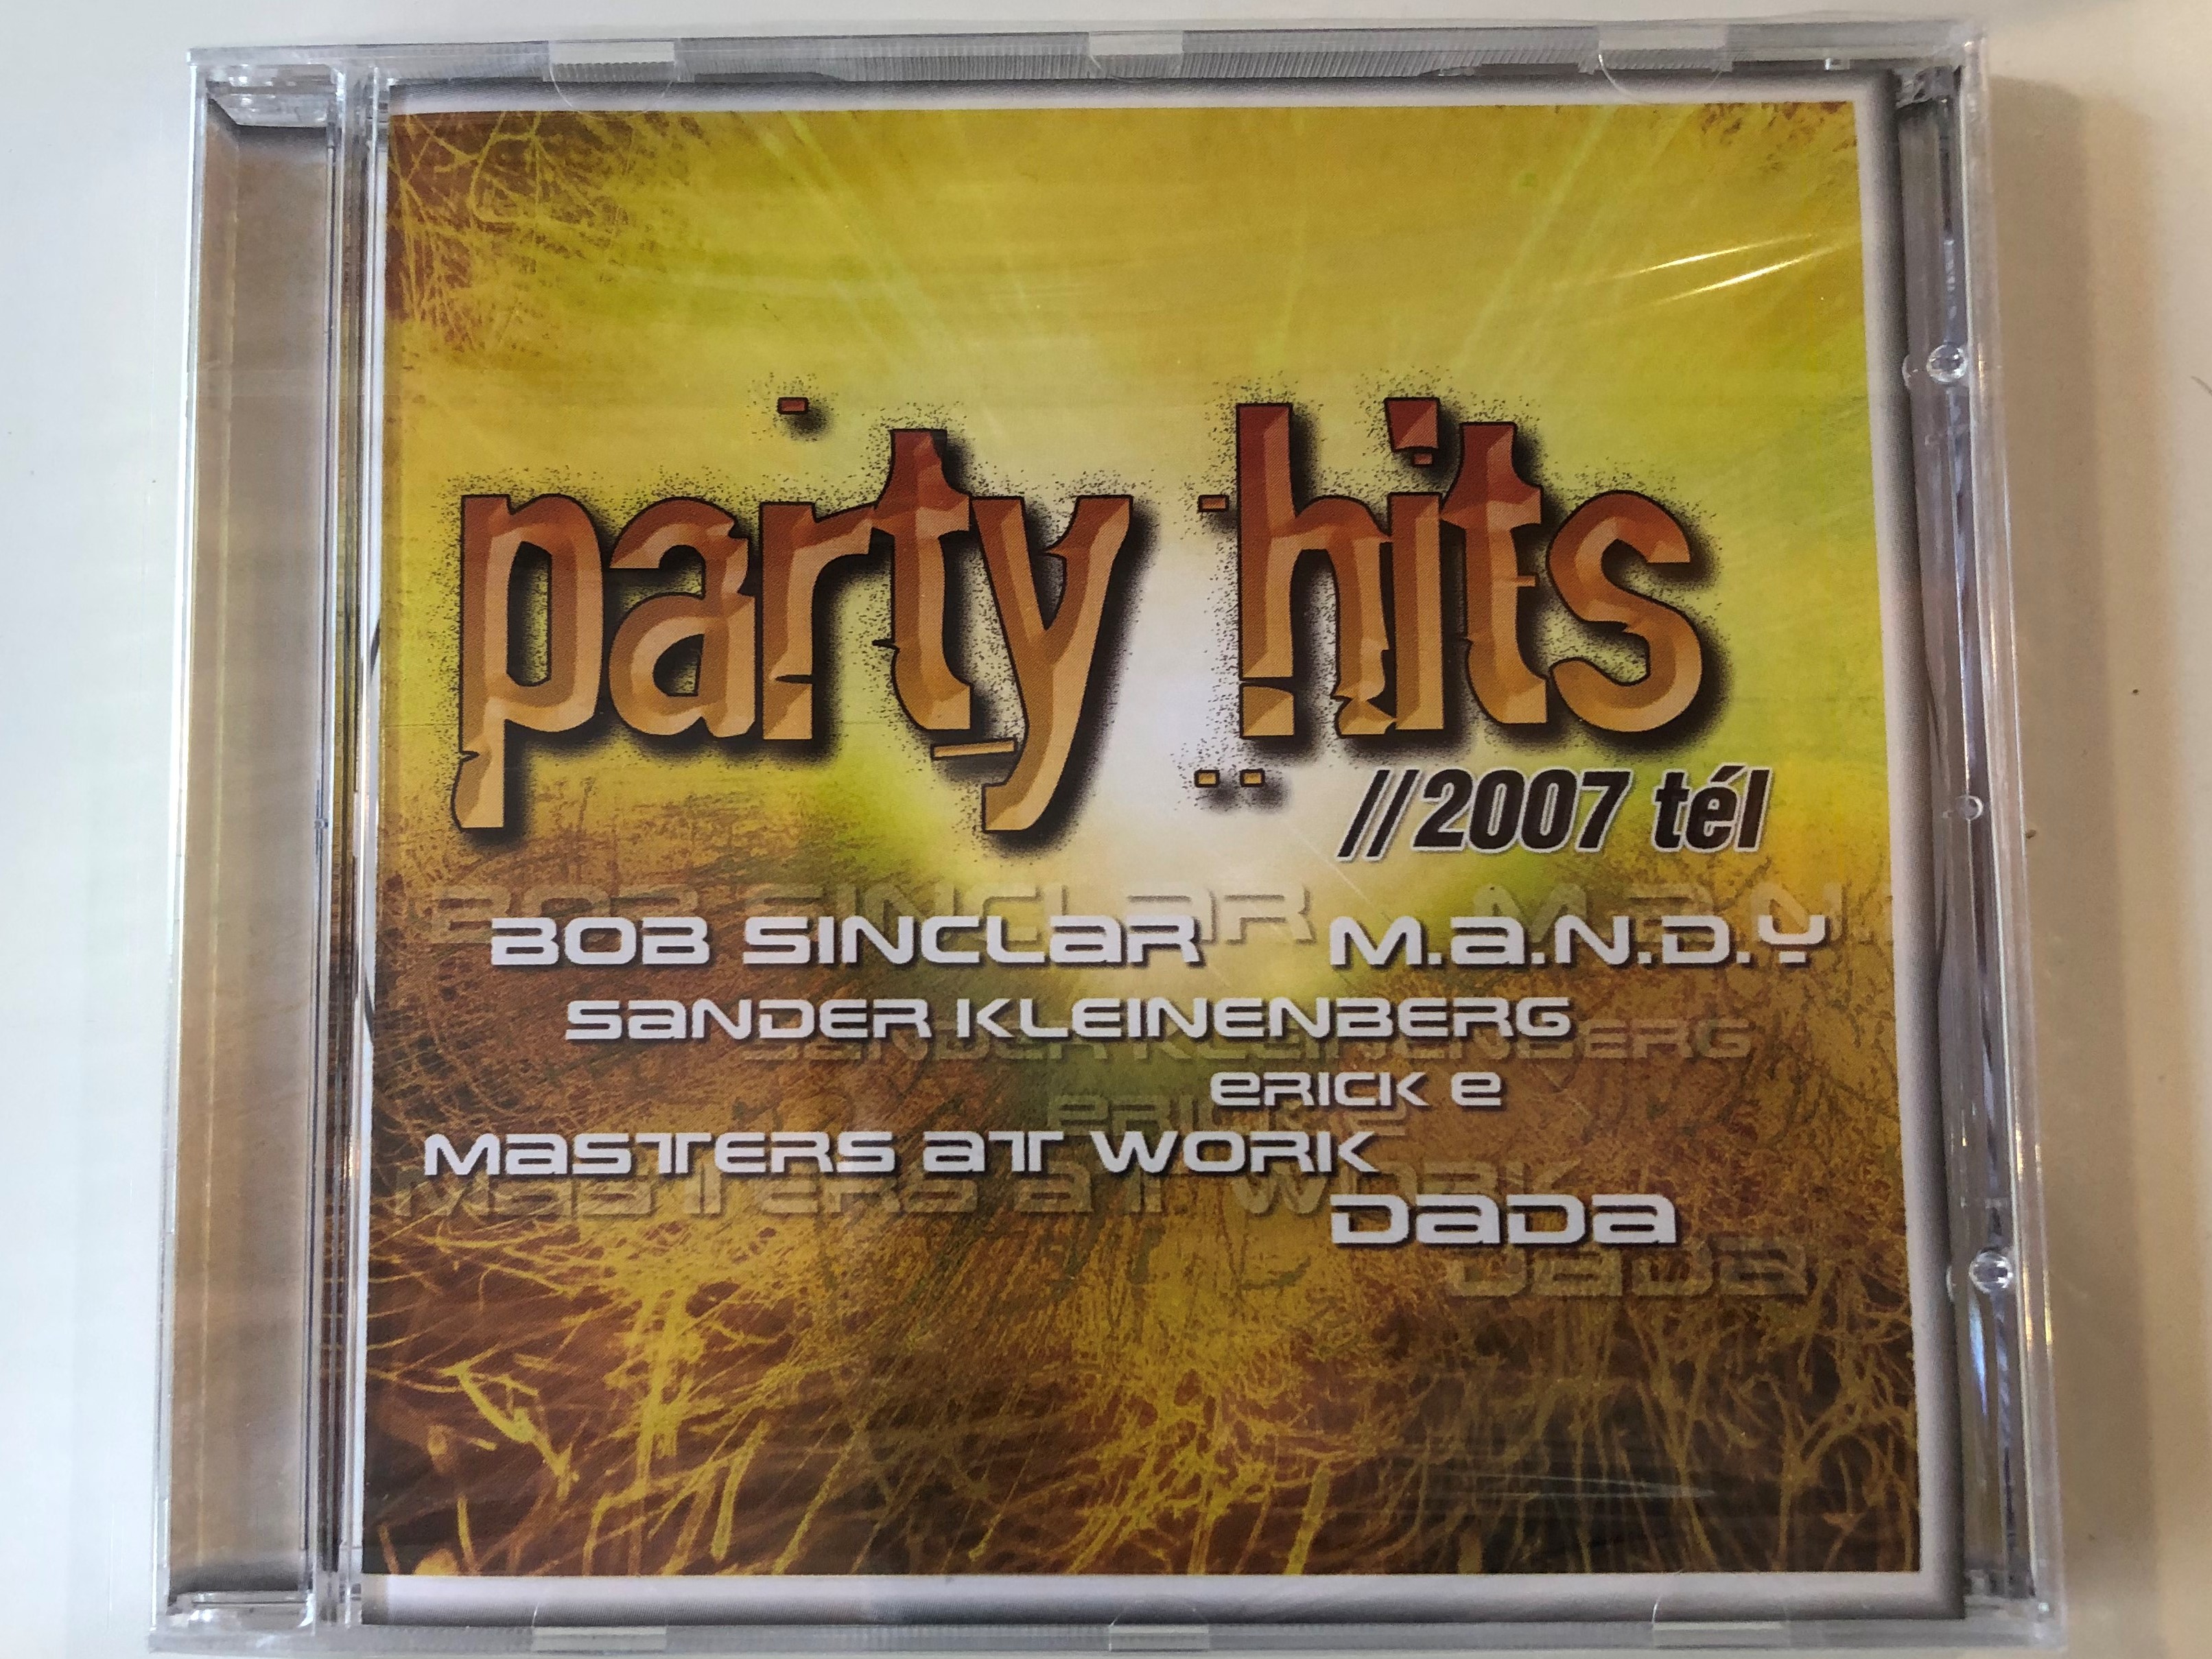 party-hits-2007-t-l-bob-sinclar-m.a.n.d.y.-sander-kleinenberg-erick-e-masters-at-work-dada-cls-records-audio-cd-2007-cls-sa122-2-1-.jpg